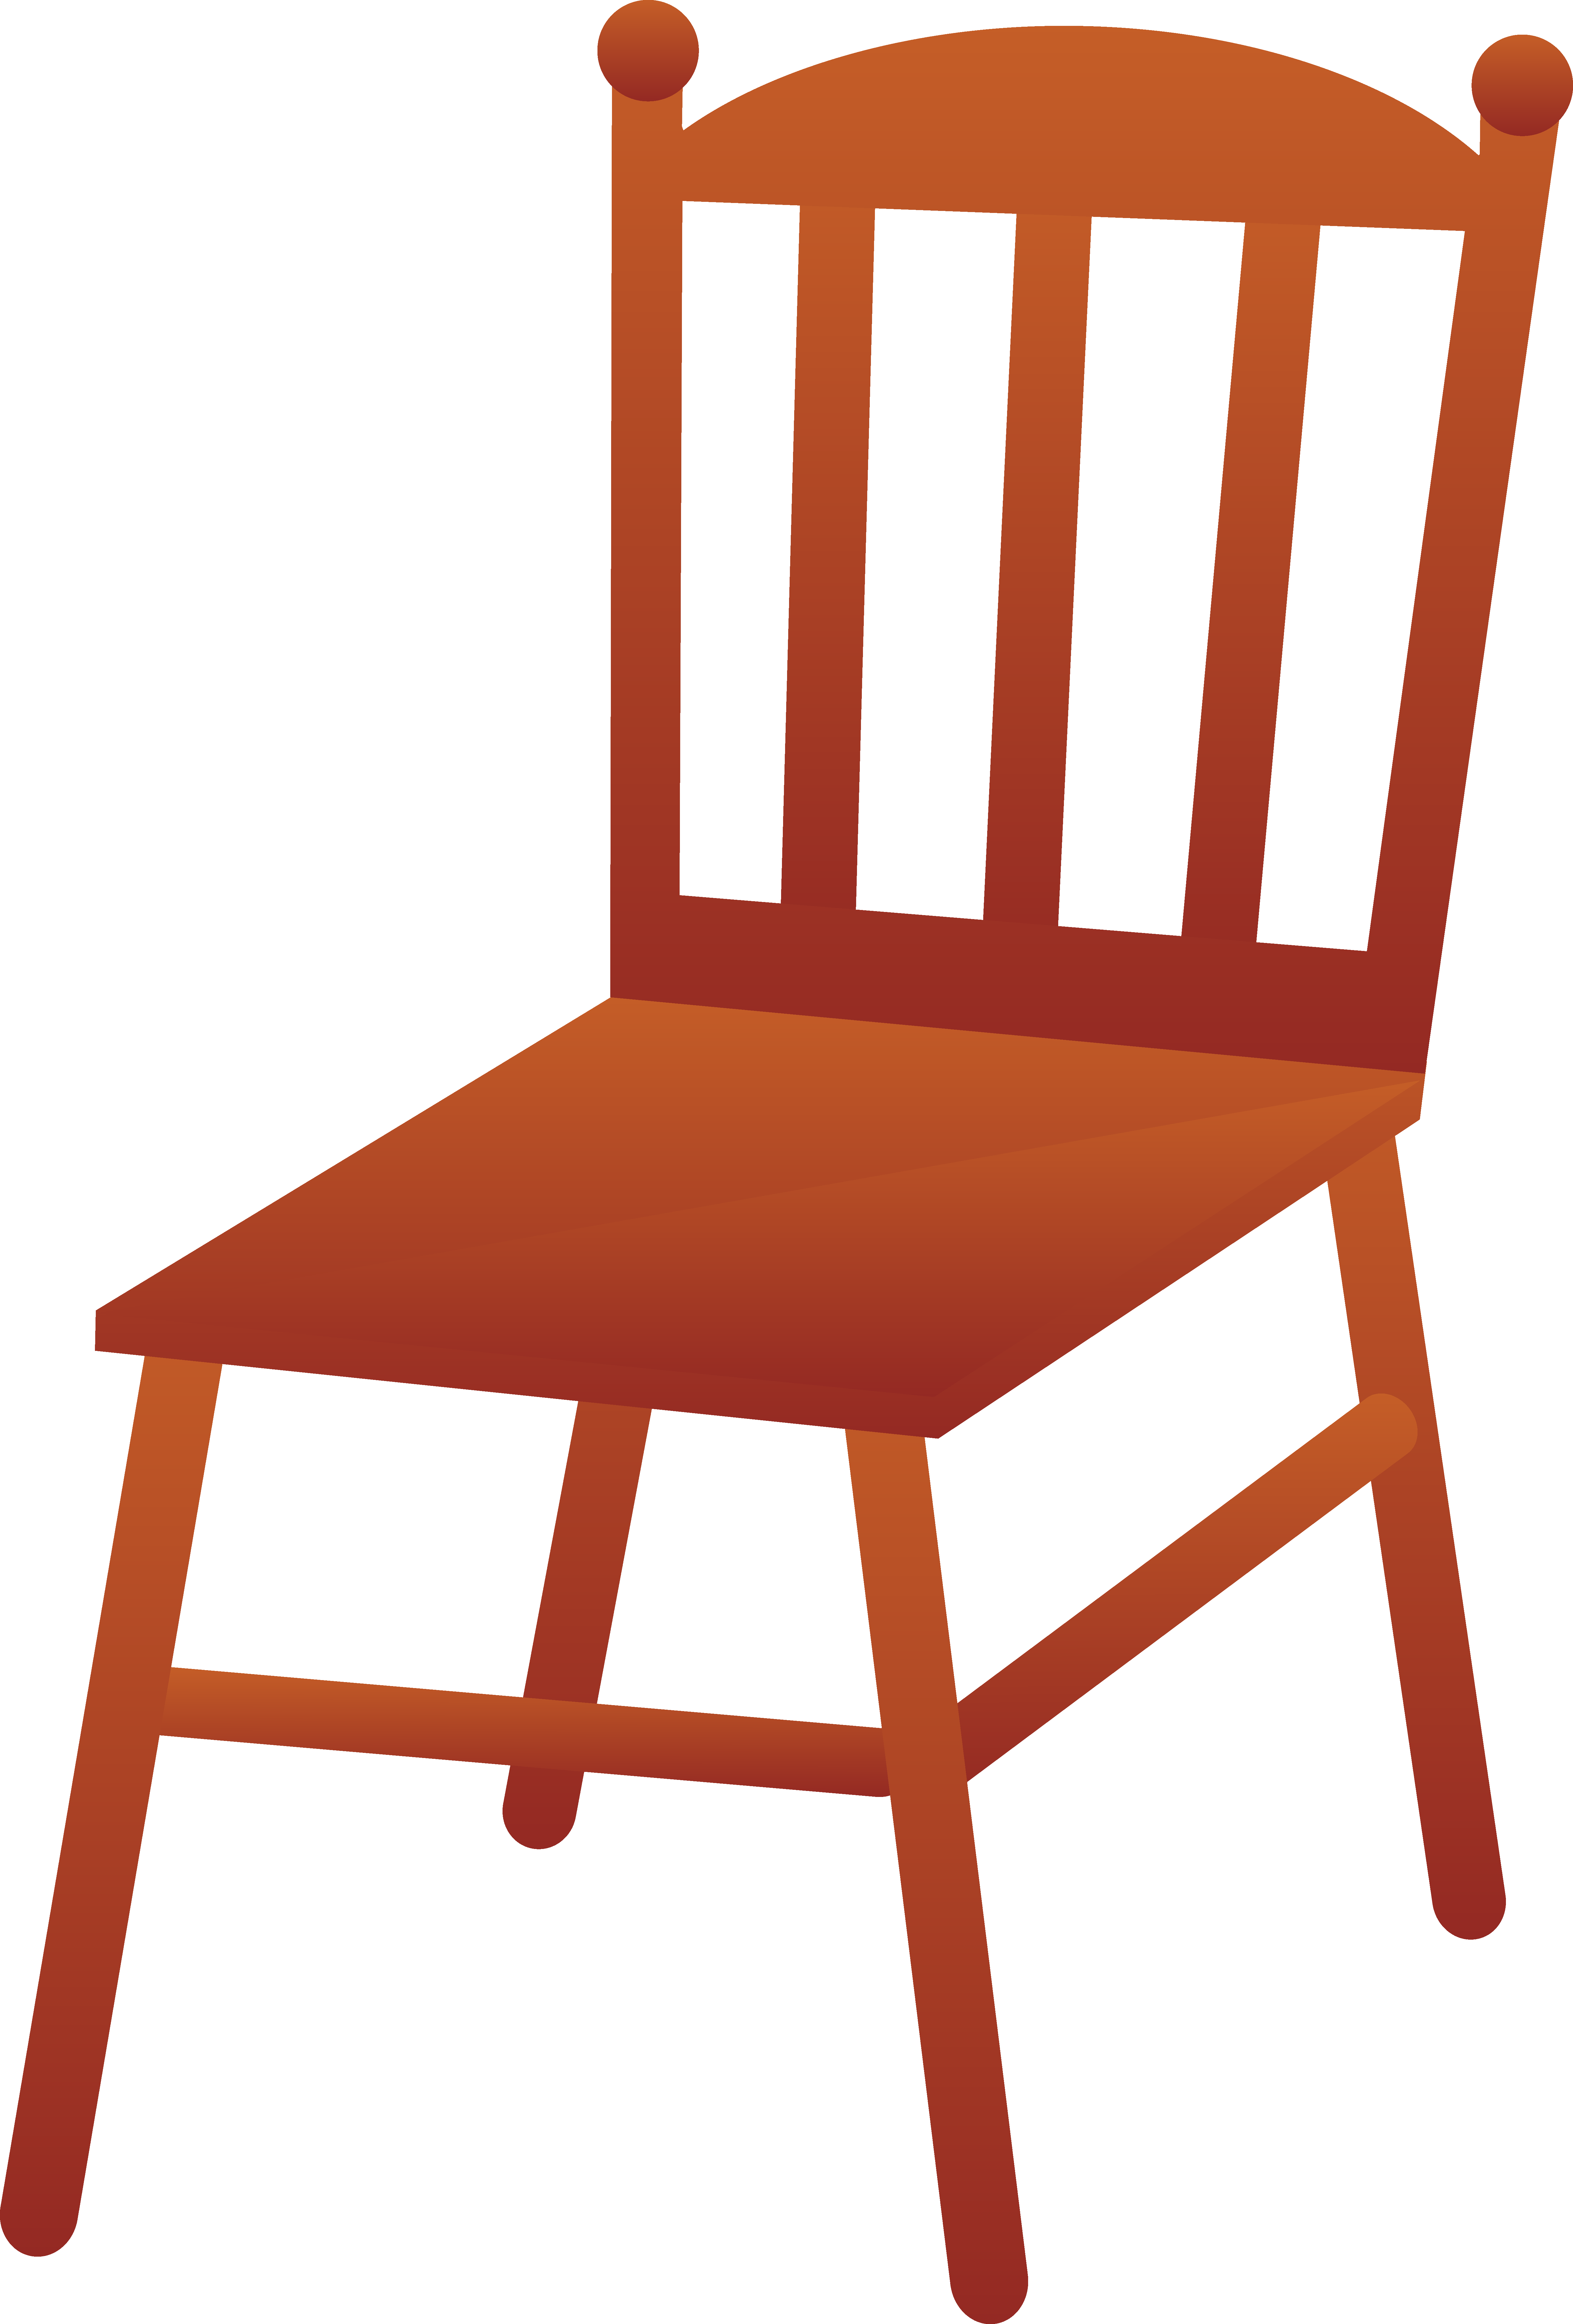 Brown Wooden Chair - Free Clip Art